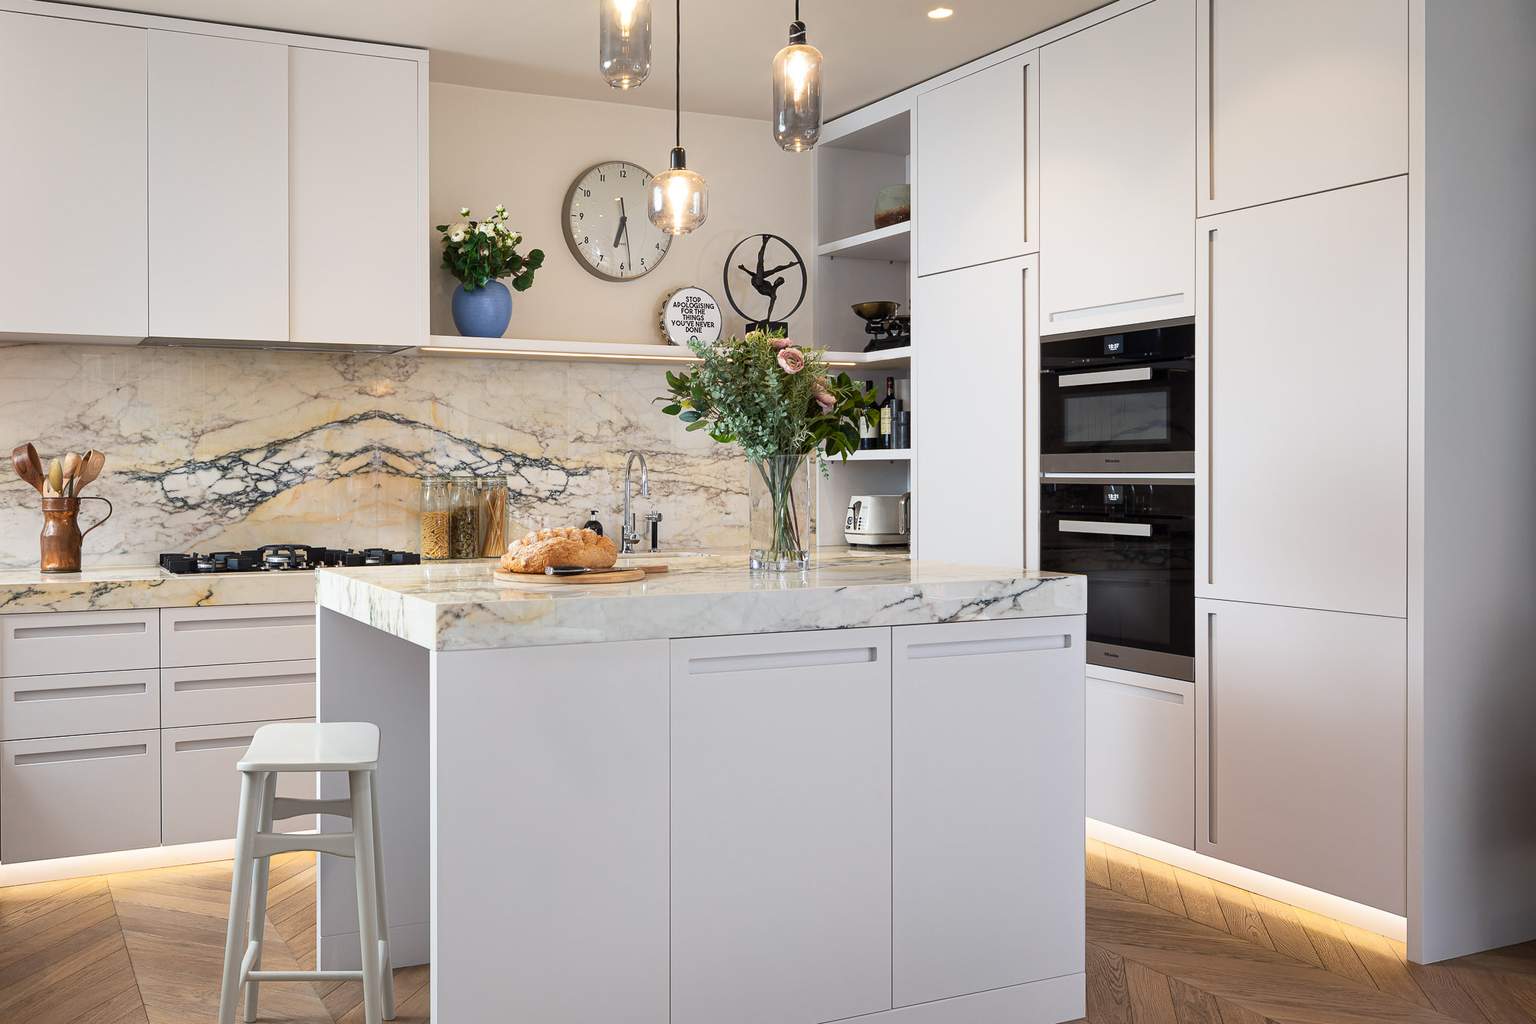 Kitchen units with marble splashback and Elle Decoration Translucent Crown Paint